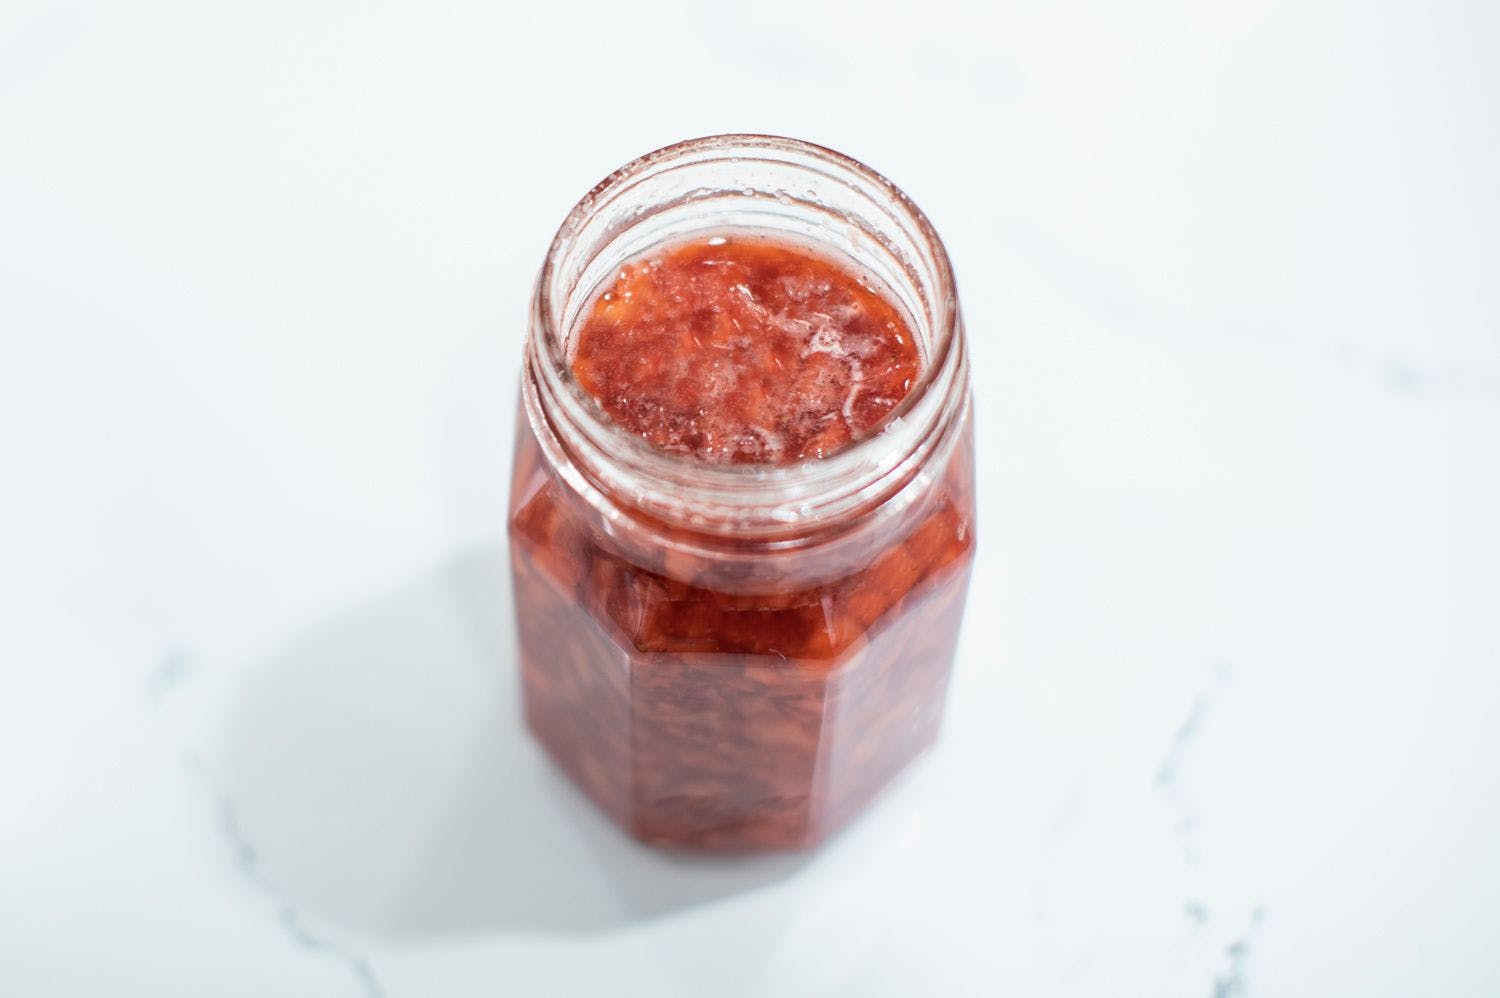 The Holly Furtick recipe: 'Sugar Free Strawberry Freezer Jam'